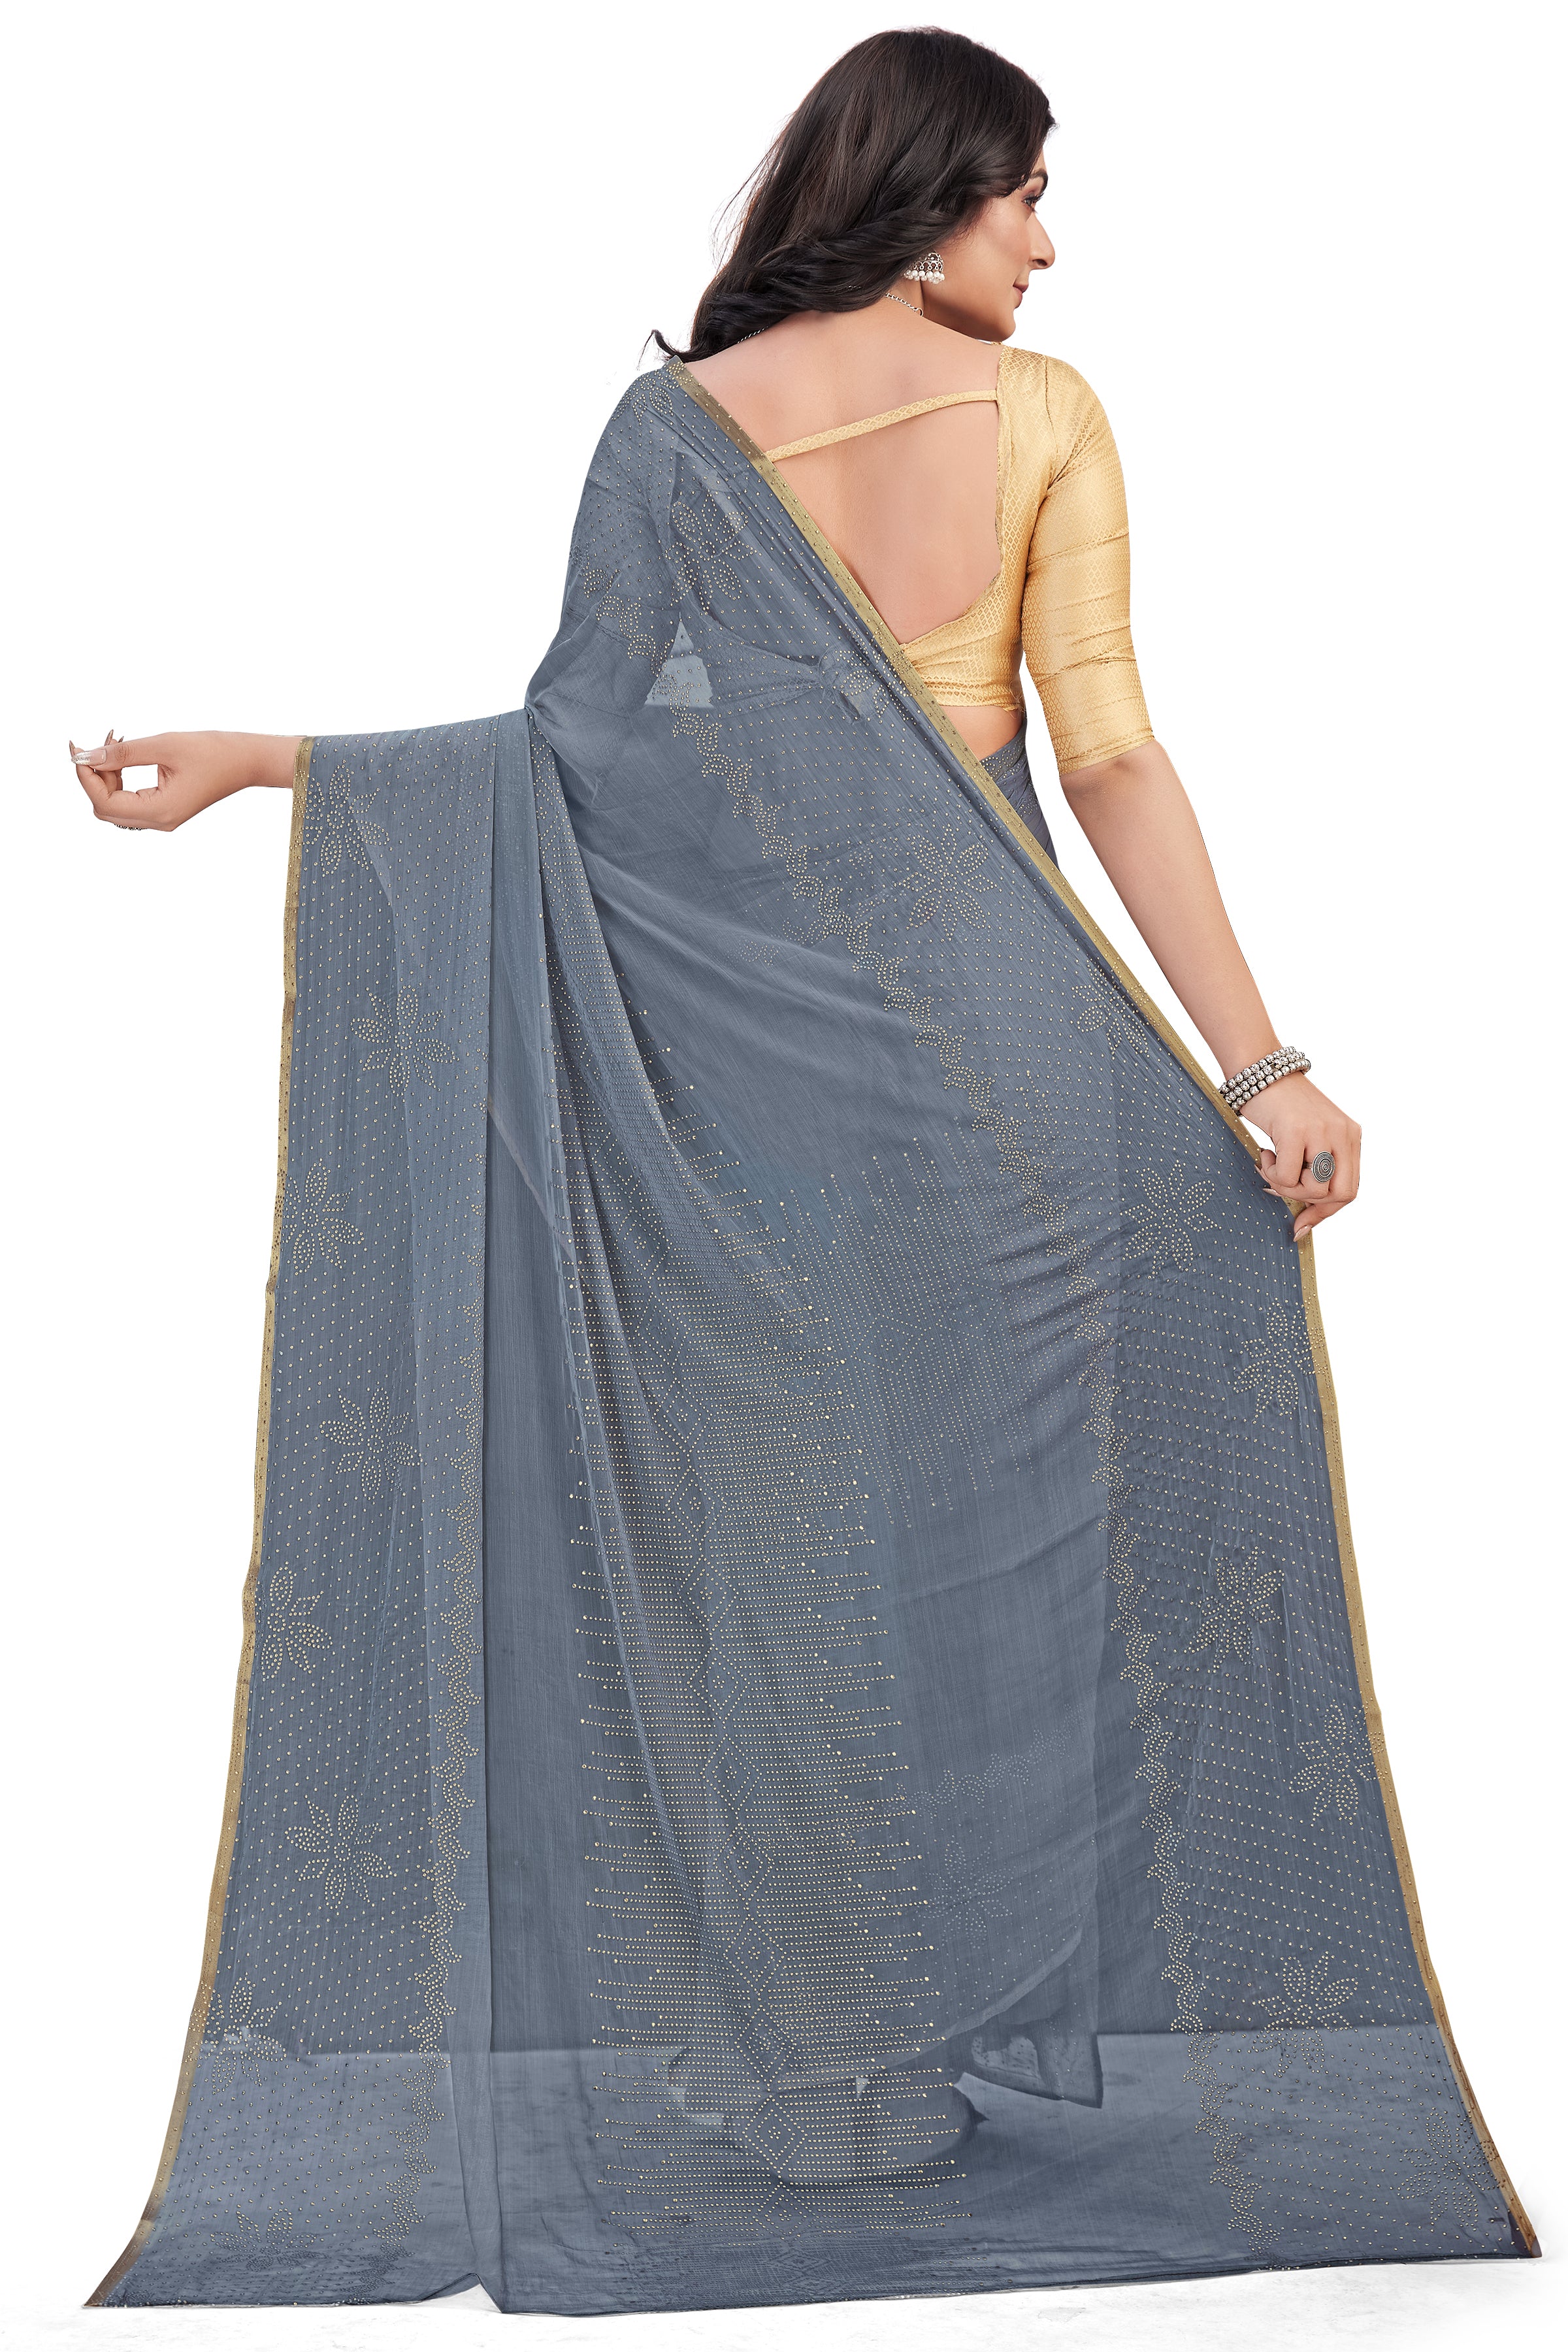 Women's Bandhani Daily Wear Chiffon Sari With Blouse Piece (Grey) - NIMIDHYA